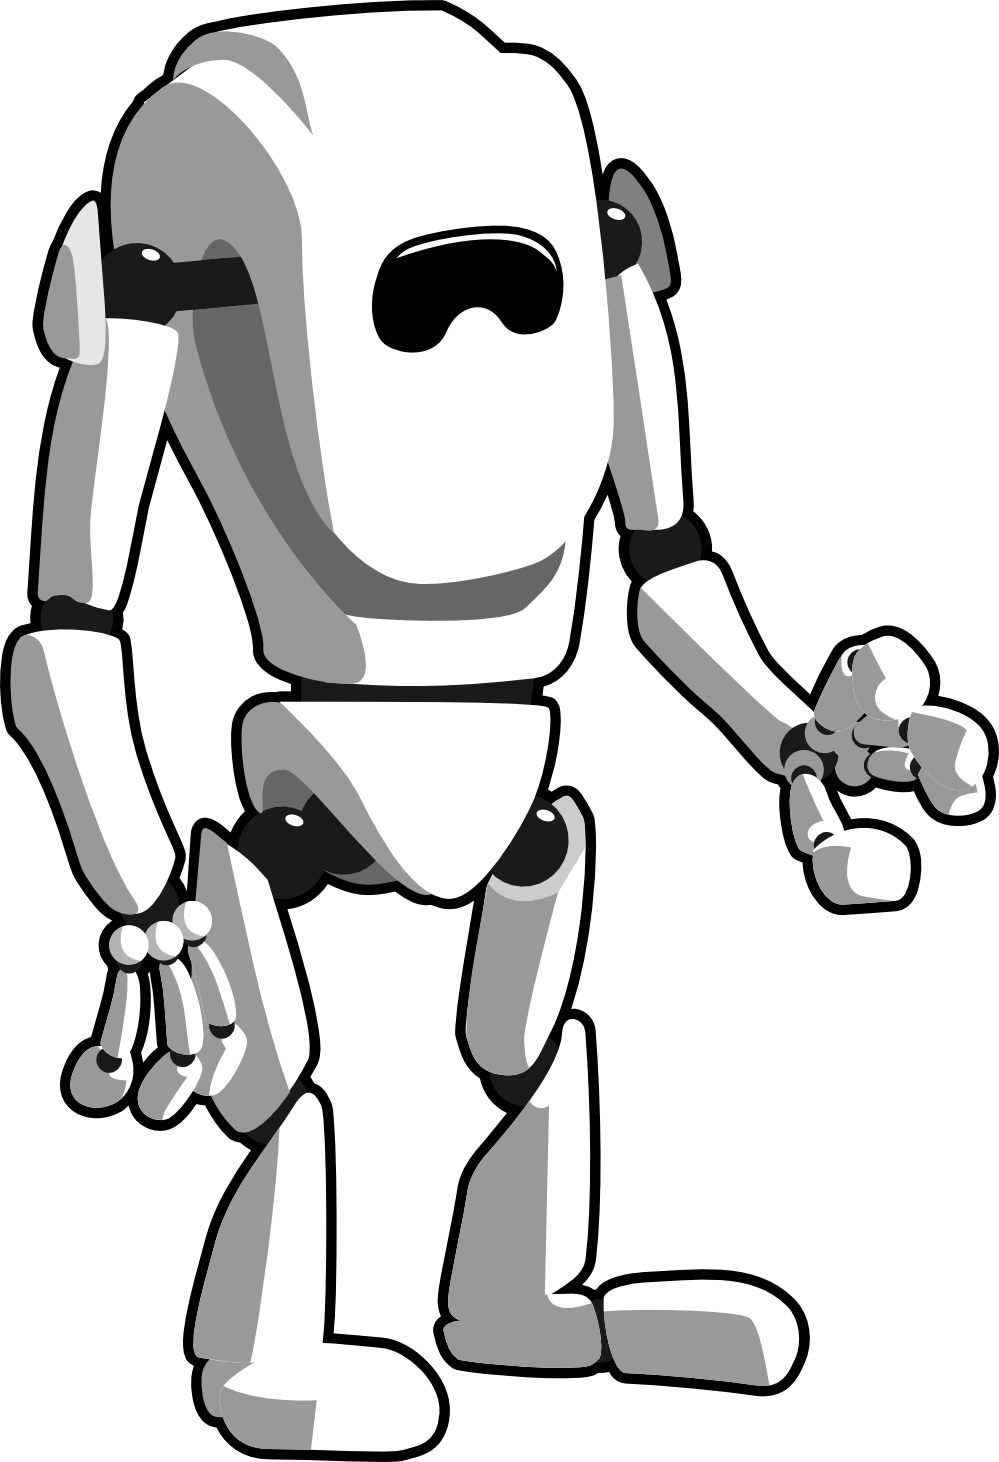 clipartist.net » Roboto